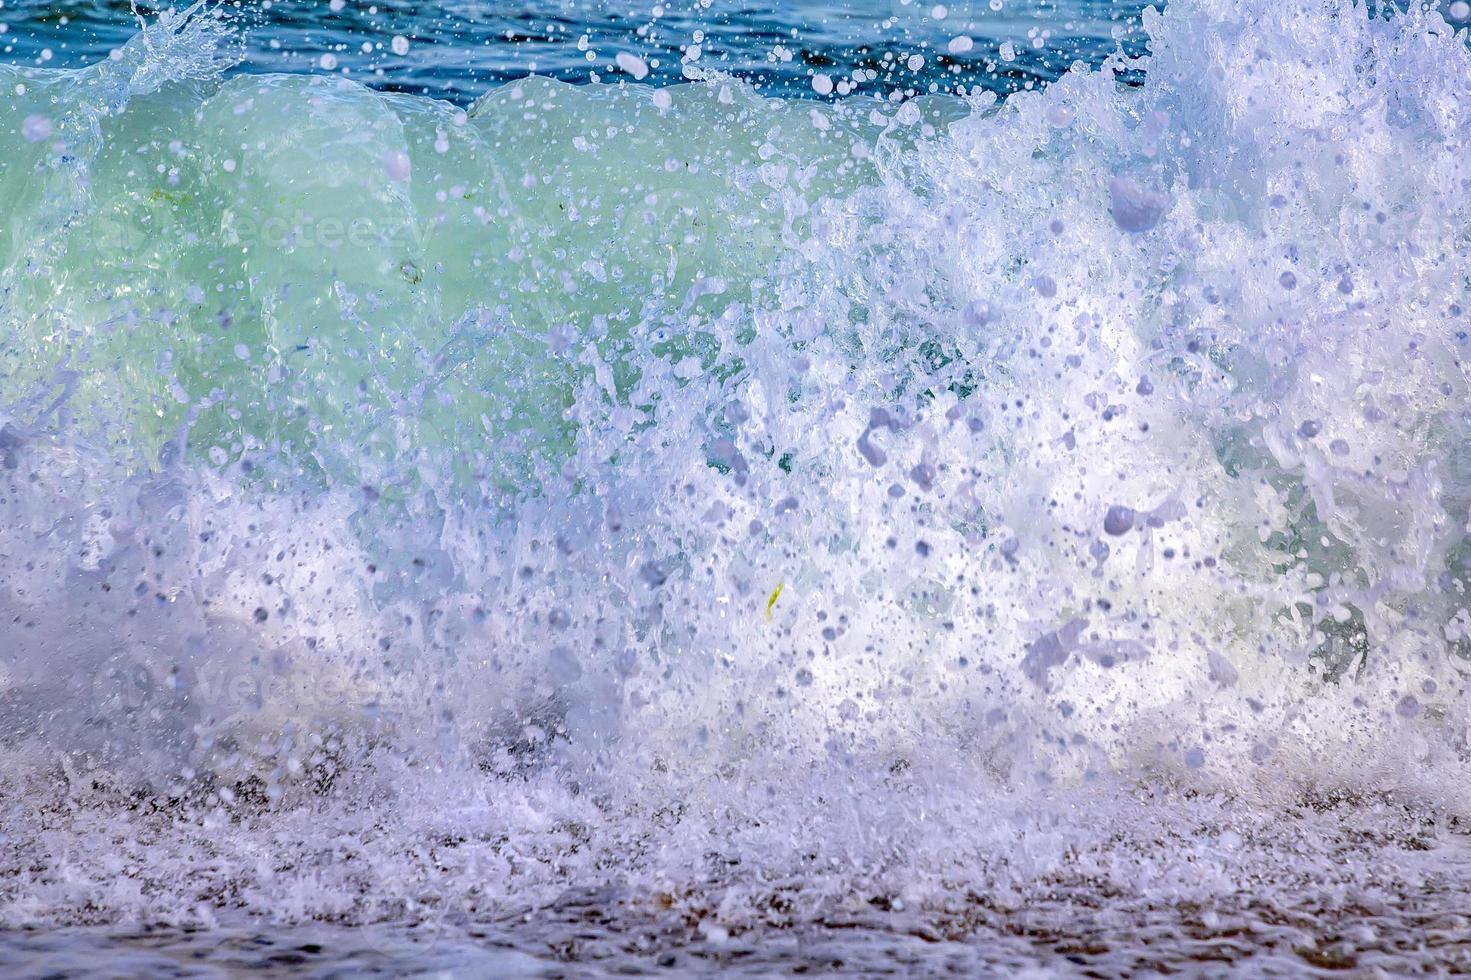 Splash of sea waves, close up, beauty water waves spray photo